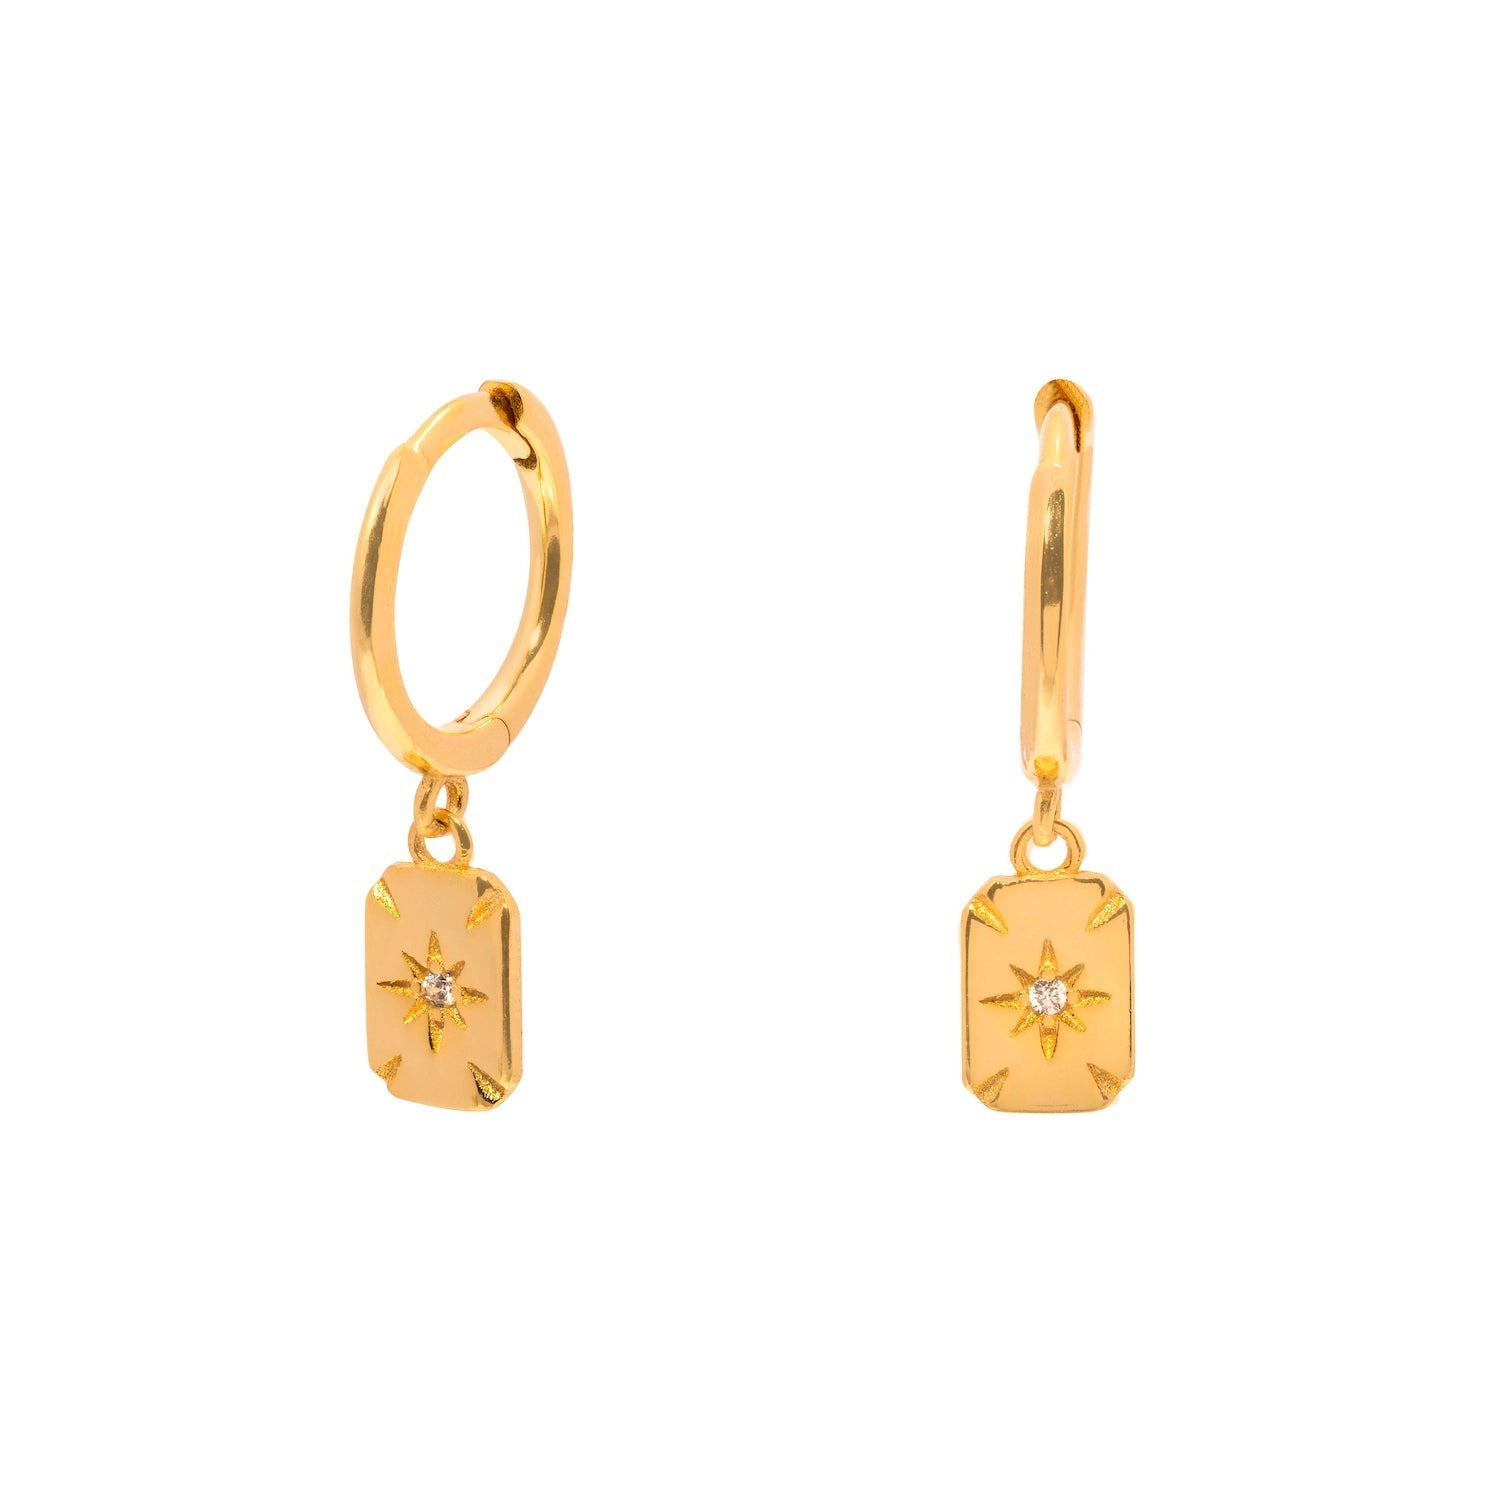 Duo Jewellery Earrings Yellow Gold Plate With Star Hoop Earrings